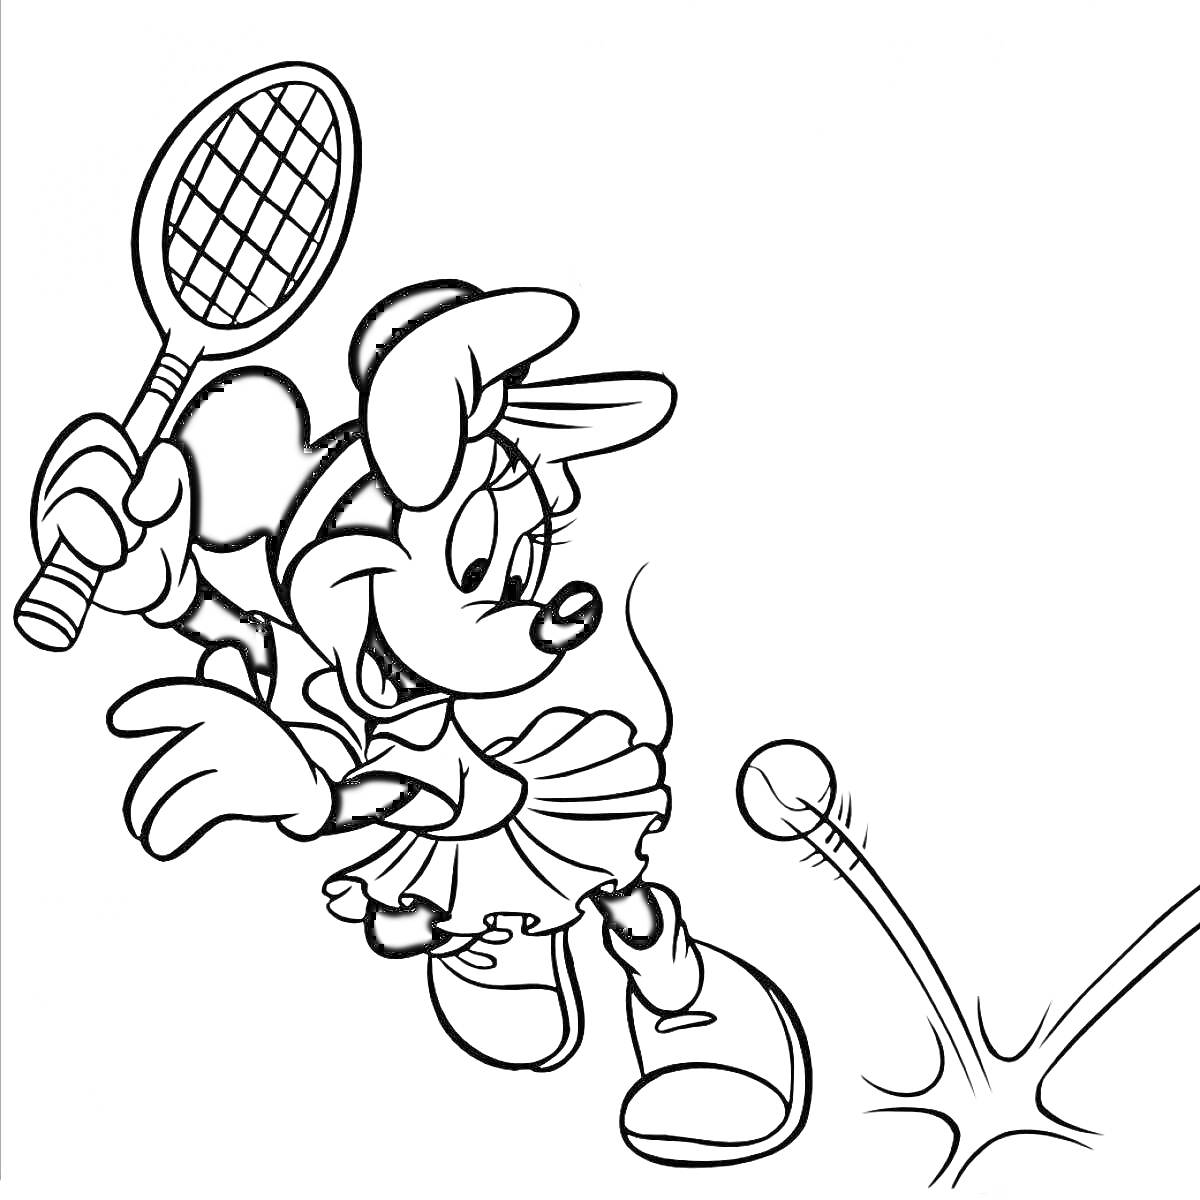 Минни Маус играет в теннис с ракеткой и мячом.